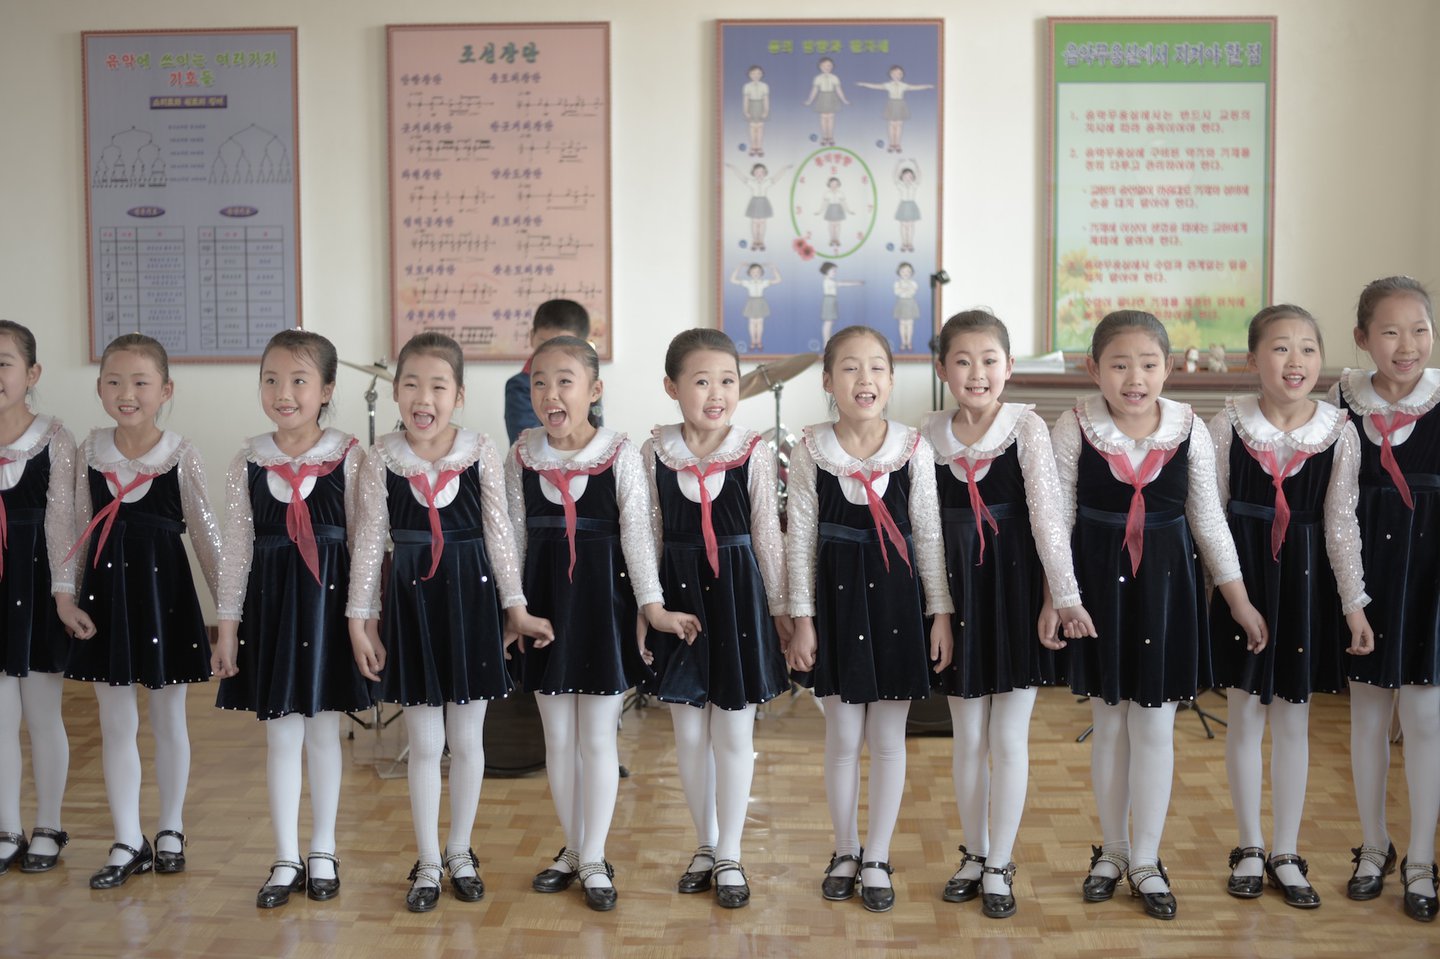 Matt Kuleusz on what it’s like to photograph the “human side” of North Korea